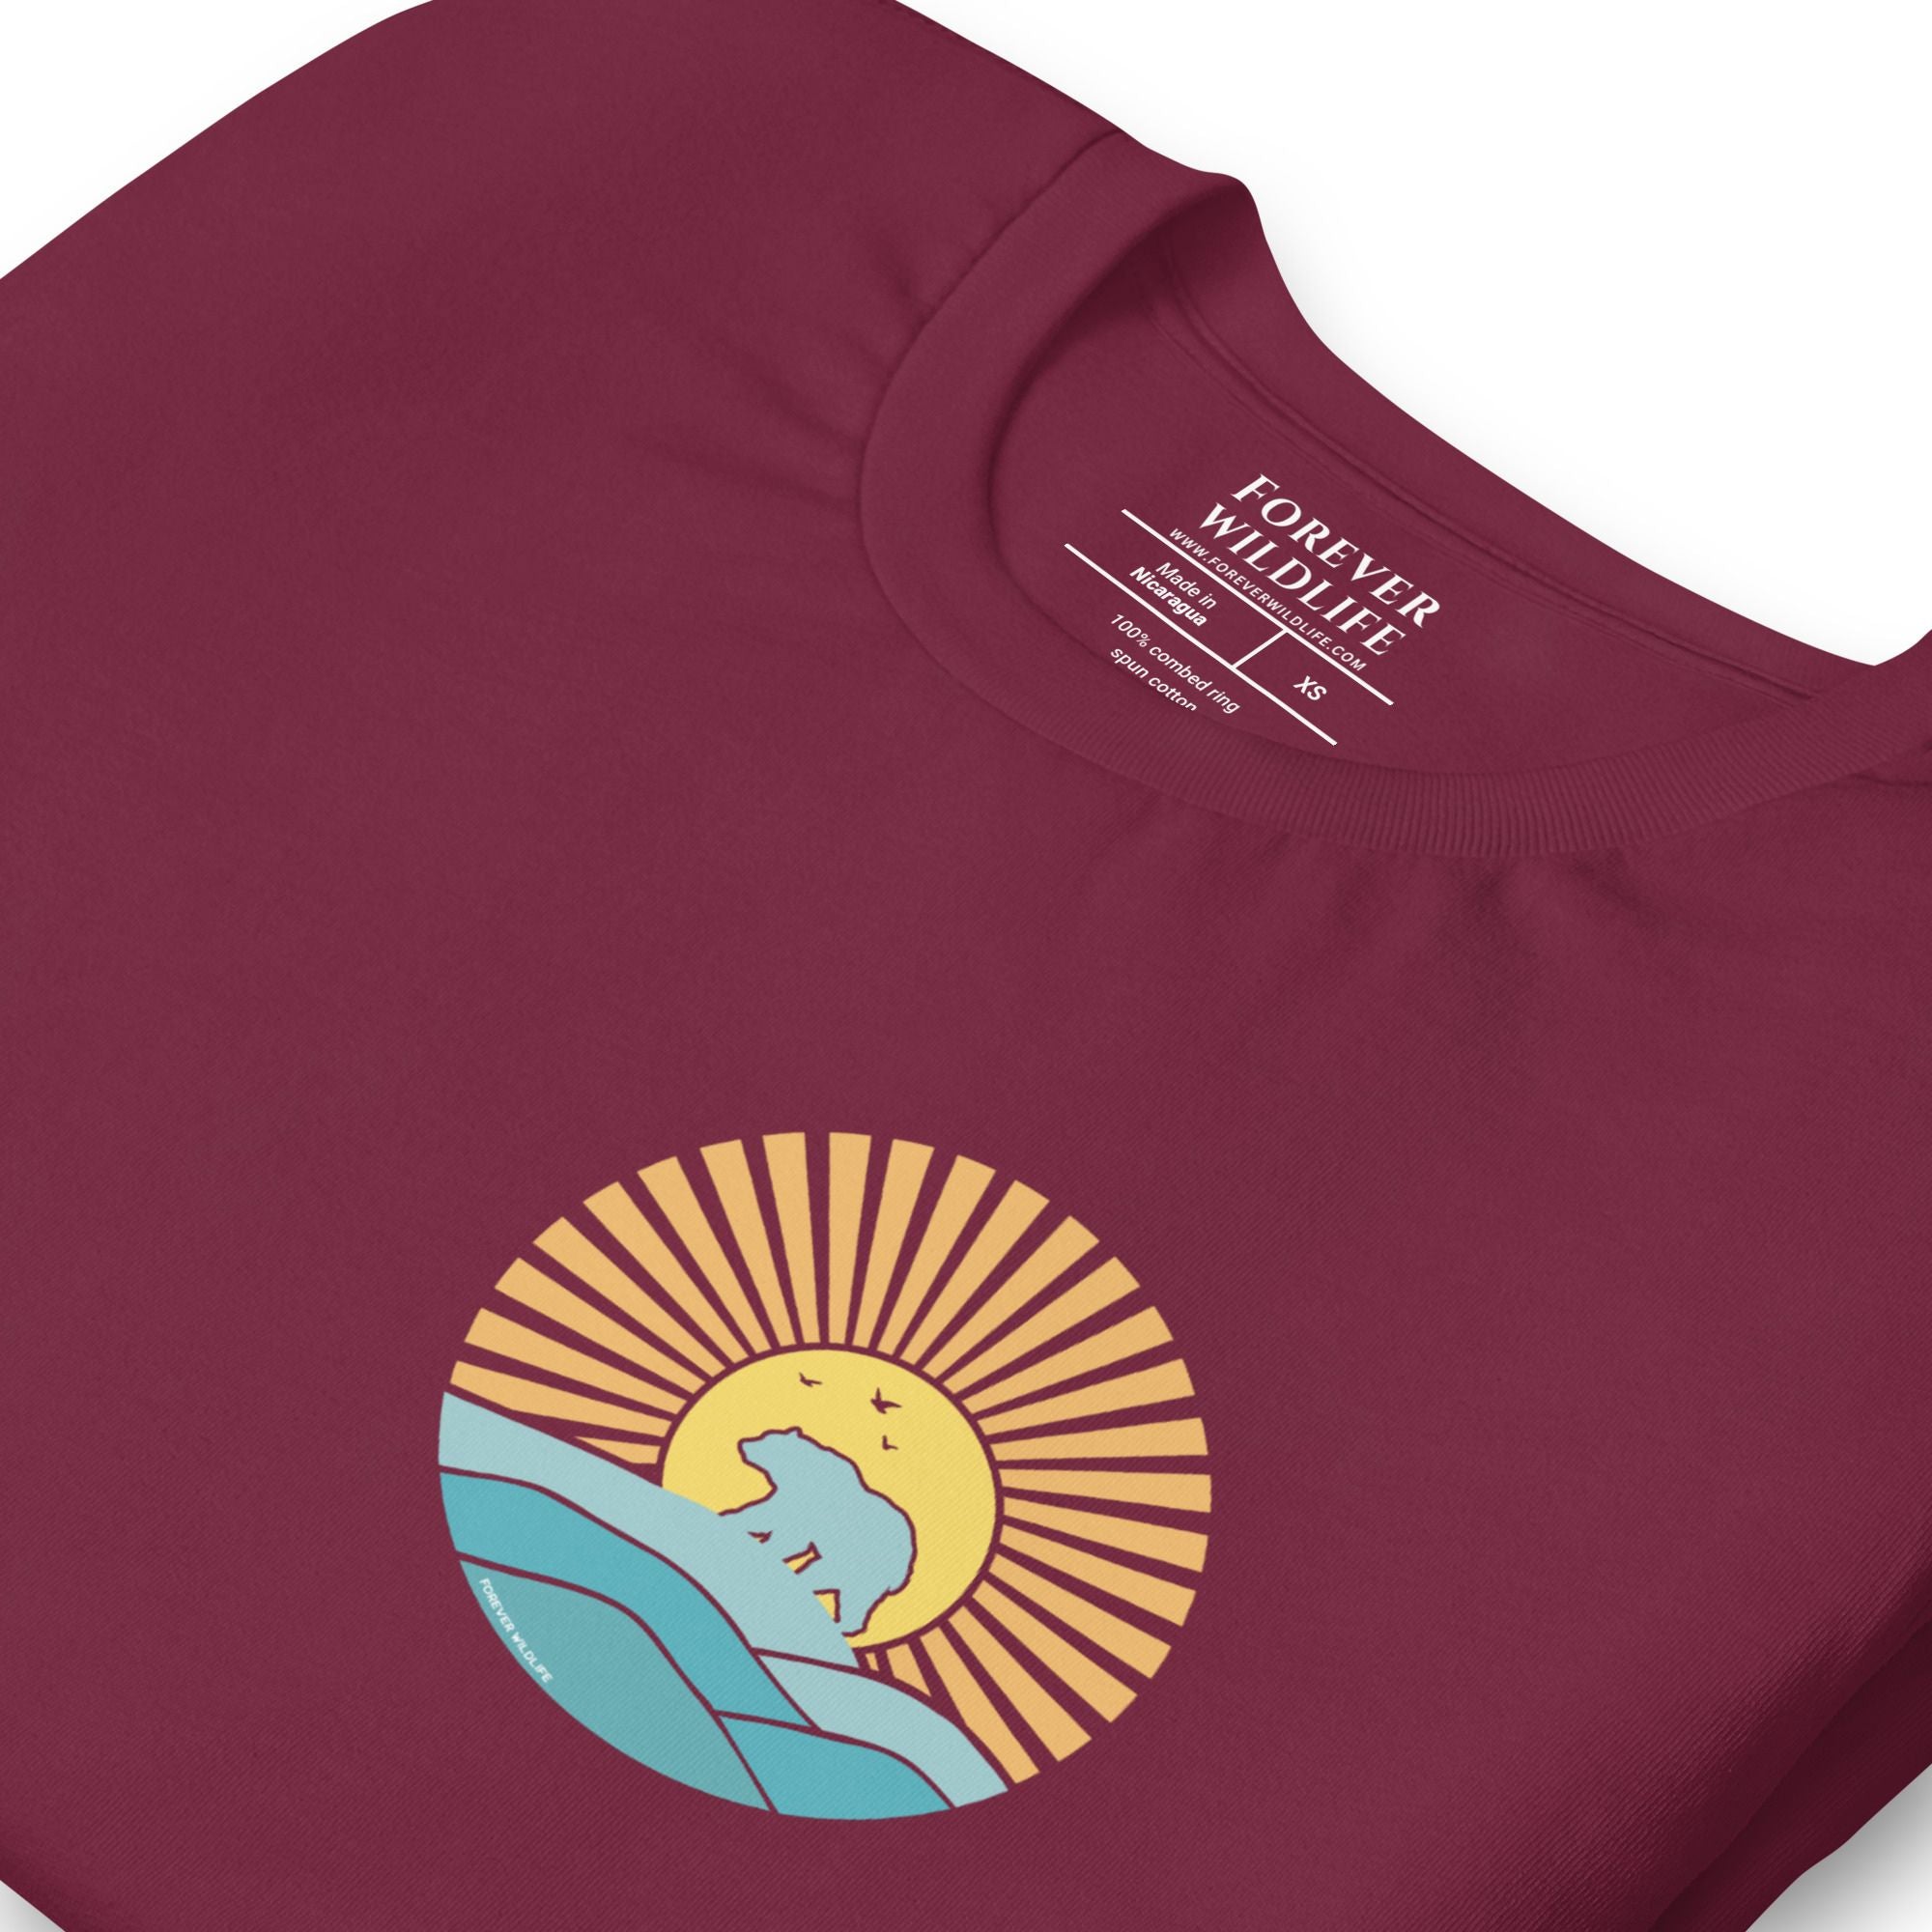 Polar Bear T-shirt in Maroon, Premium Wildlife Animal Inspirational T-shirt Design, part of Wildlife T-Shirts & Clothing from Forever Wildlife.